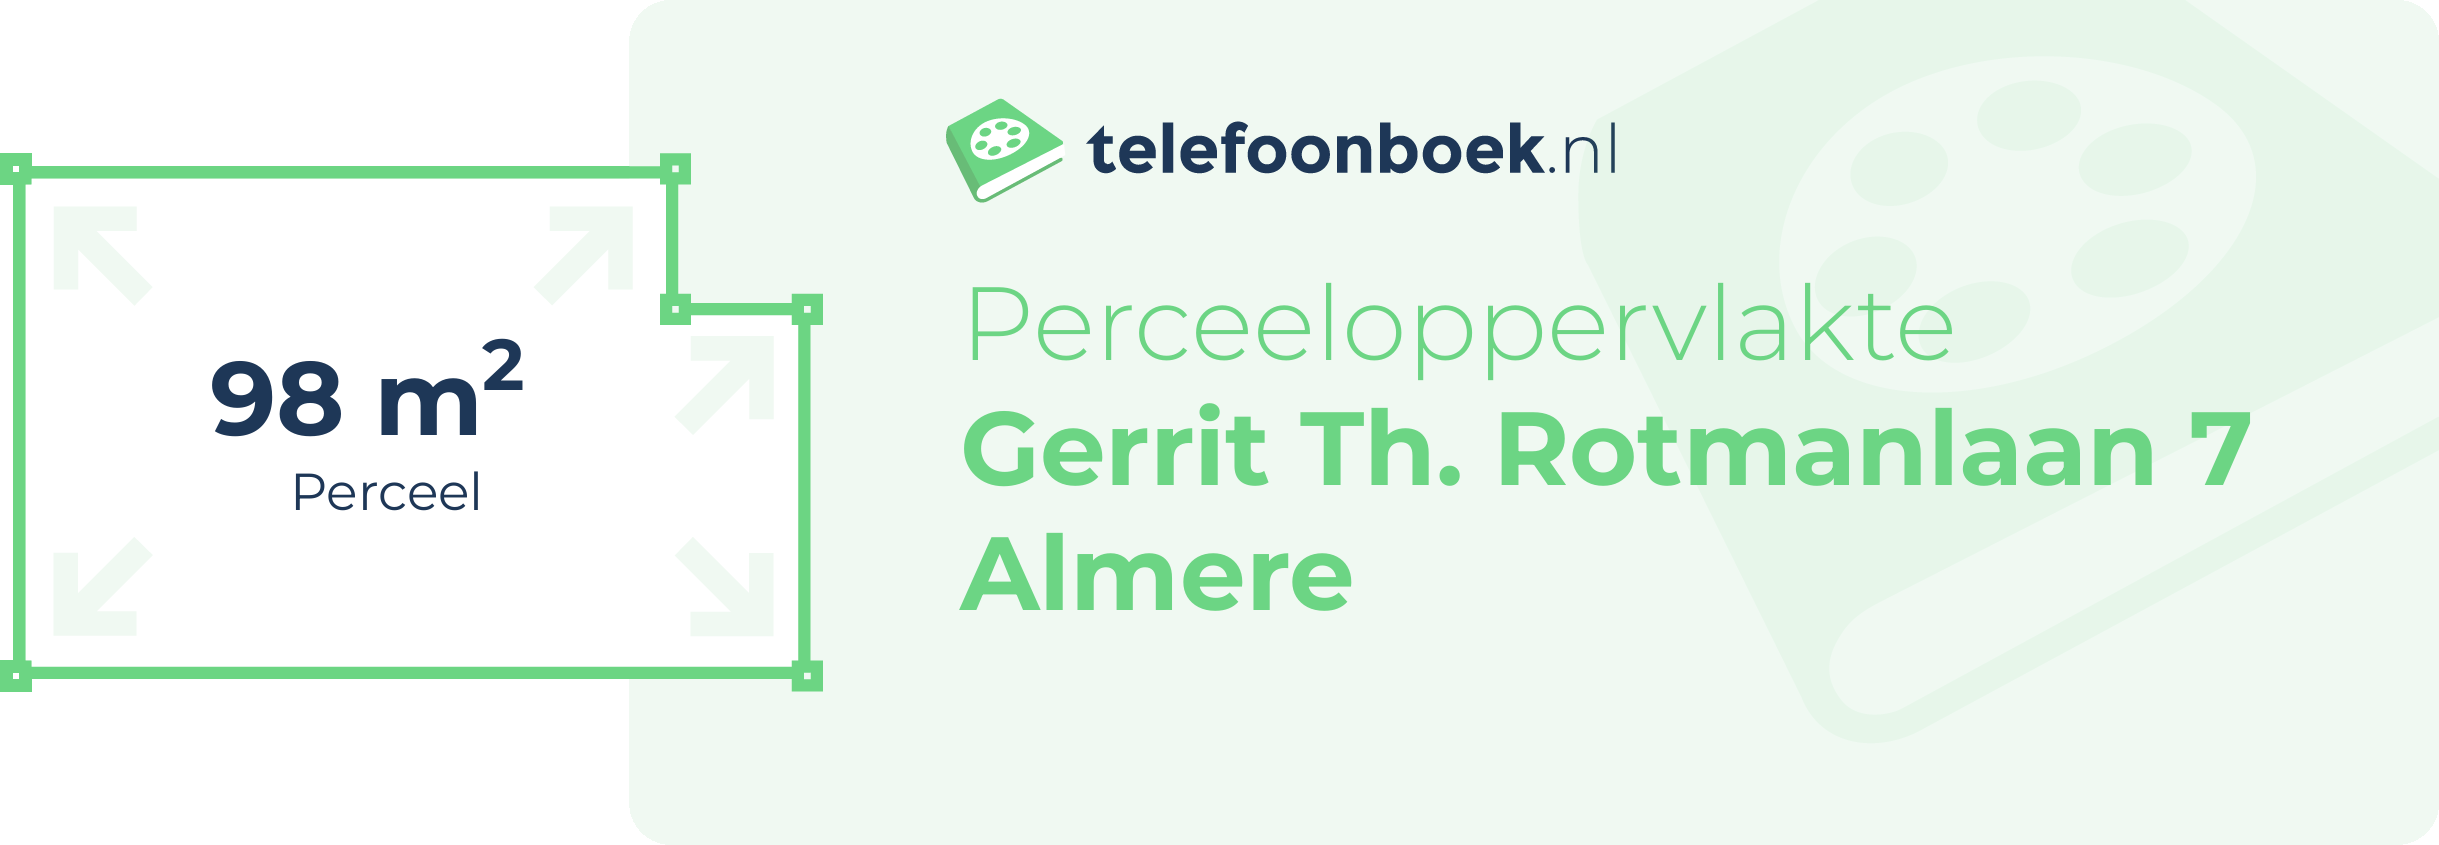 Perceeloppervlakte Gerrit Th. Rotmanlaan 7 Almere